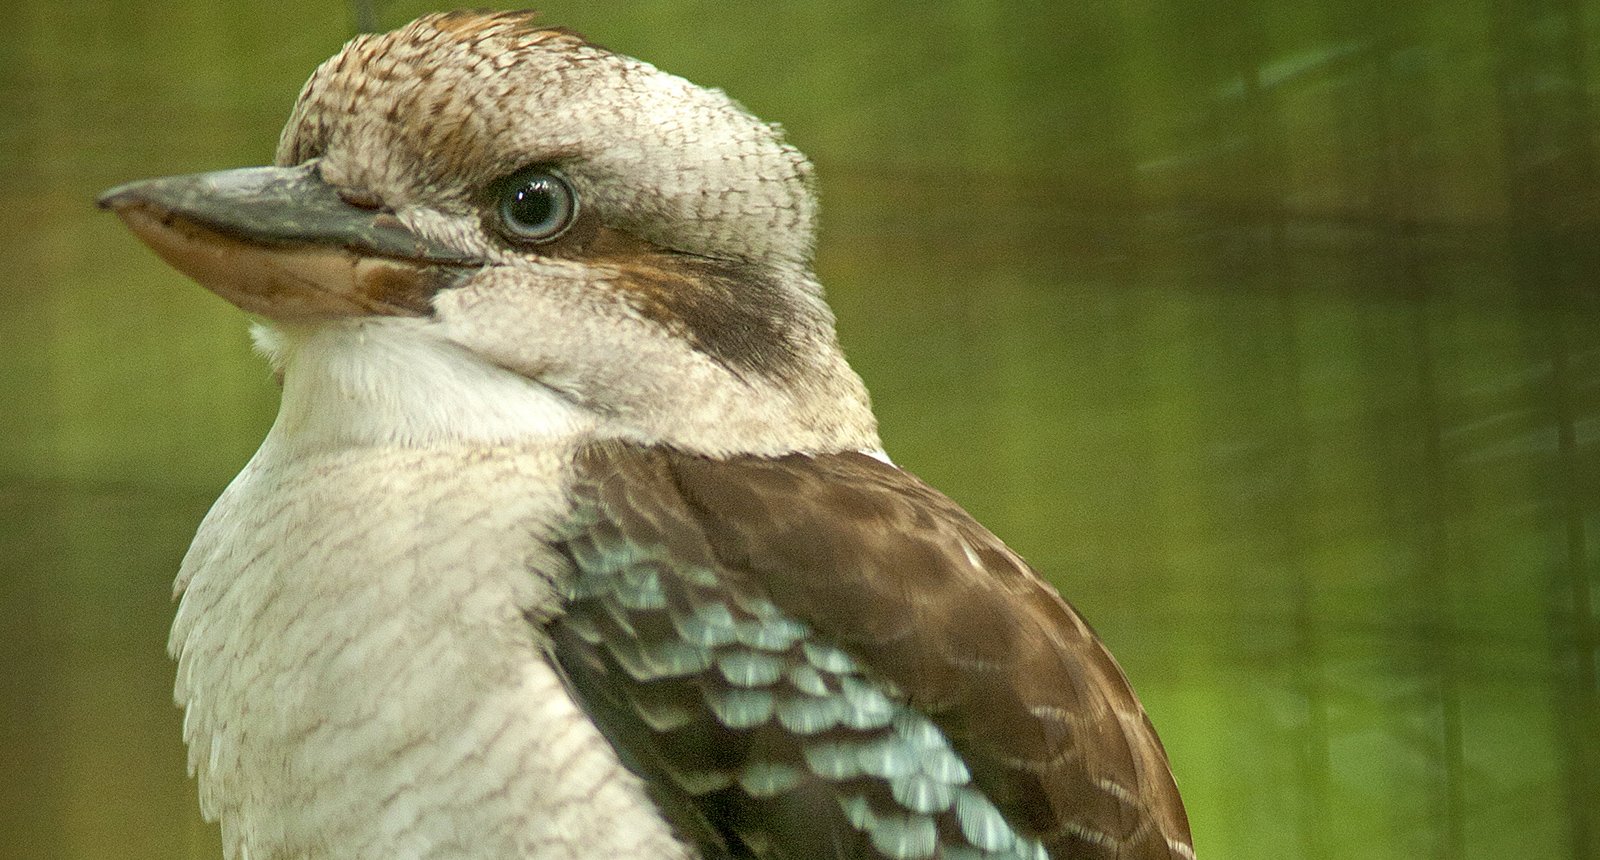 Kookaburra - Dacelo novaeguineae